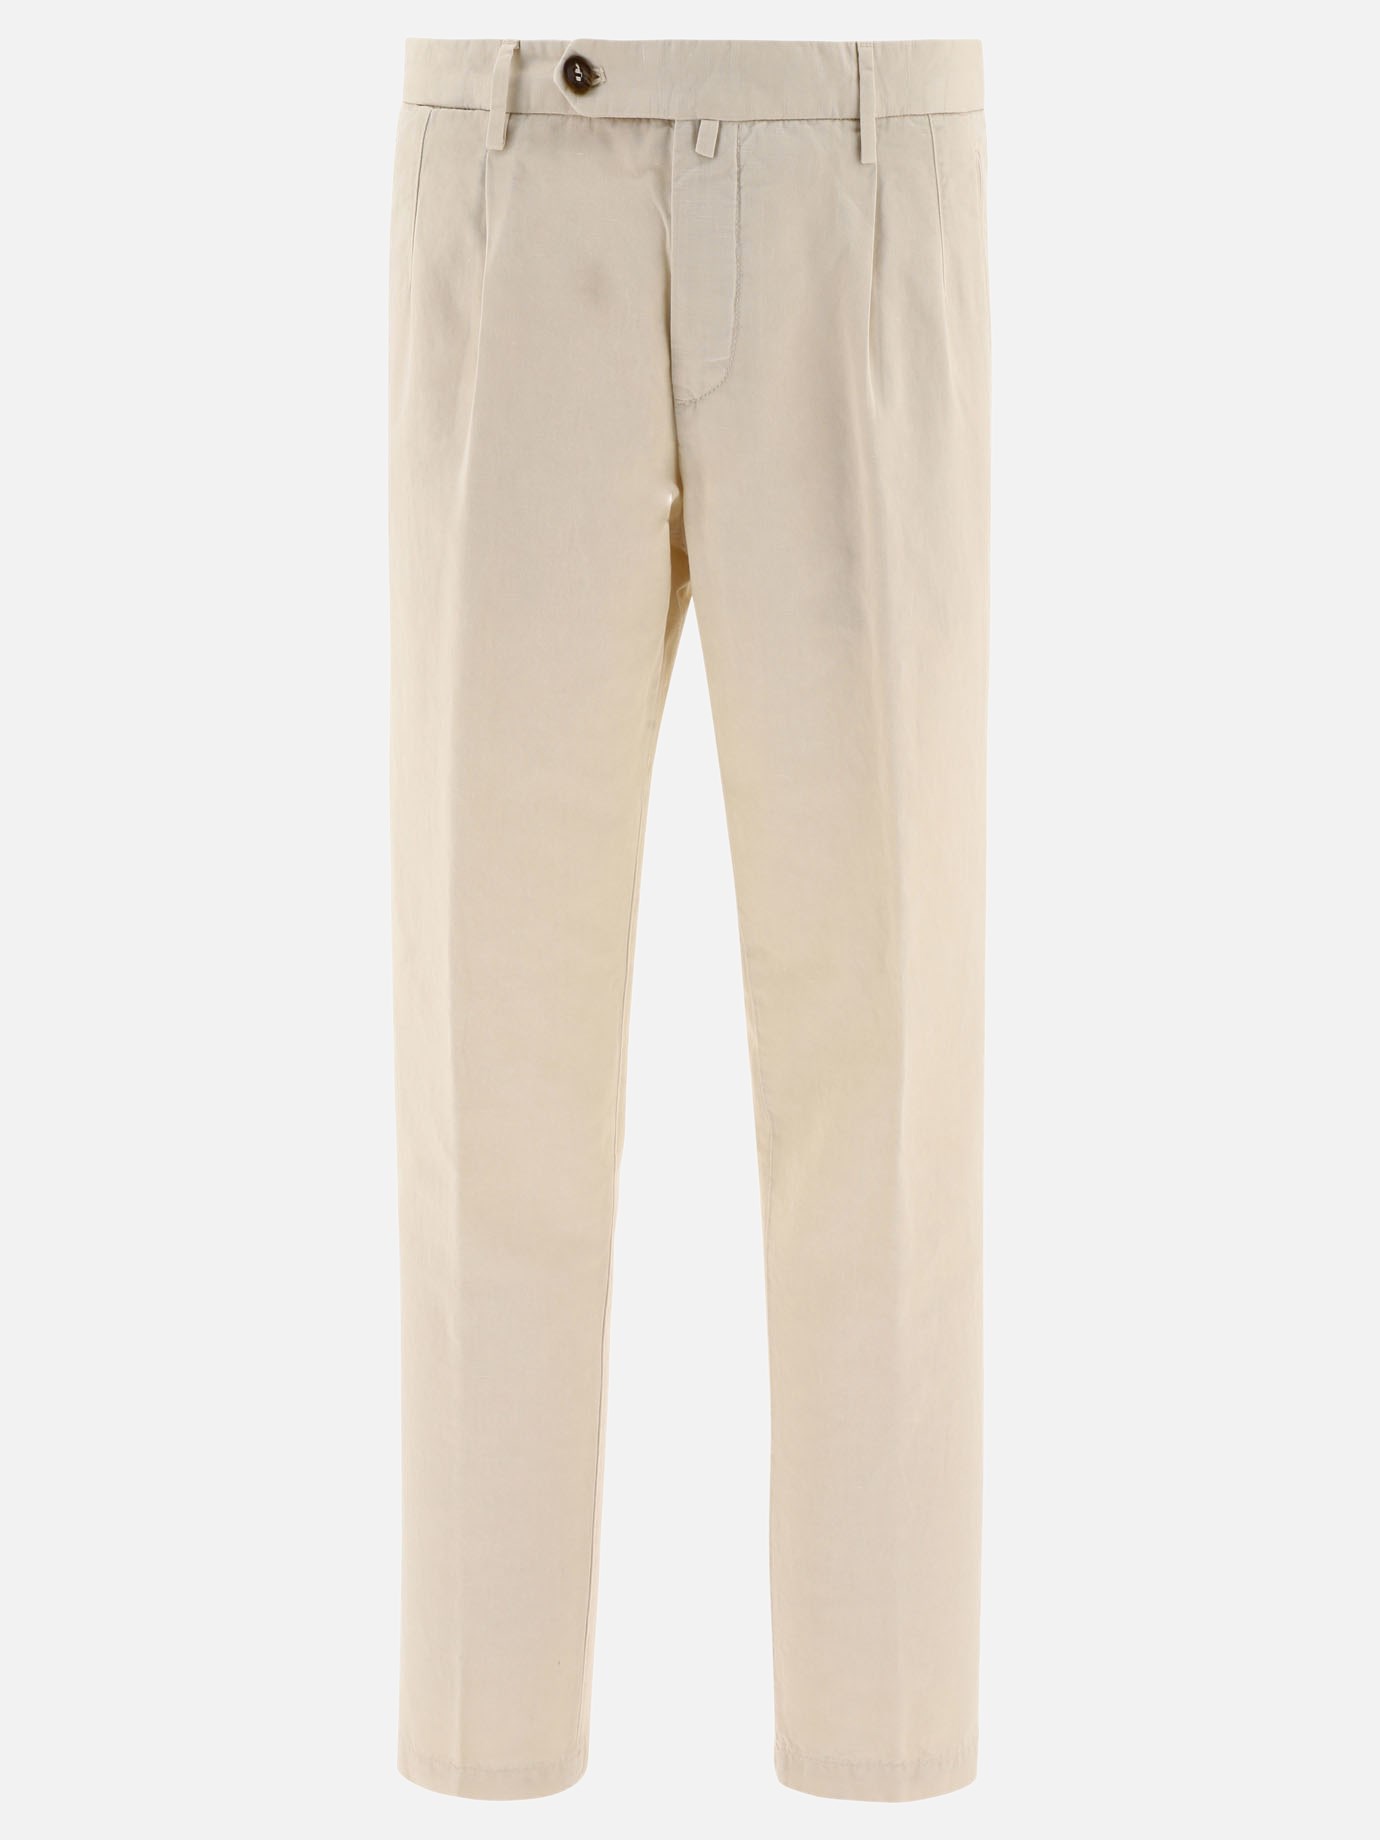 Pantaloni  Cernobbio by Briglia 1949 - 5